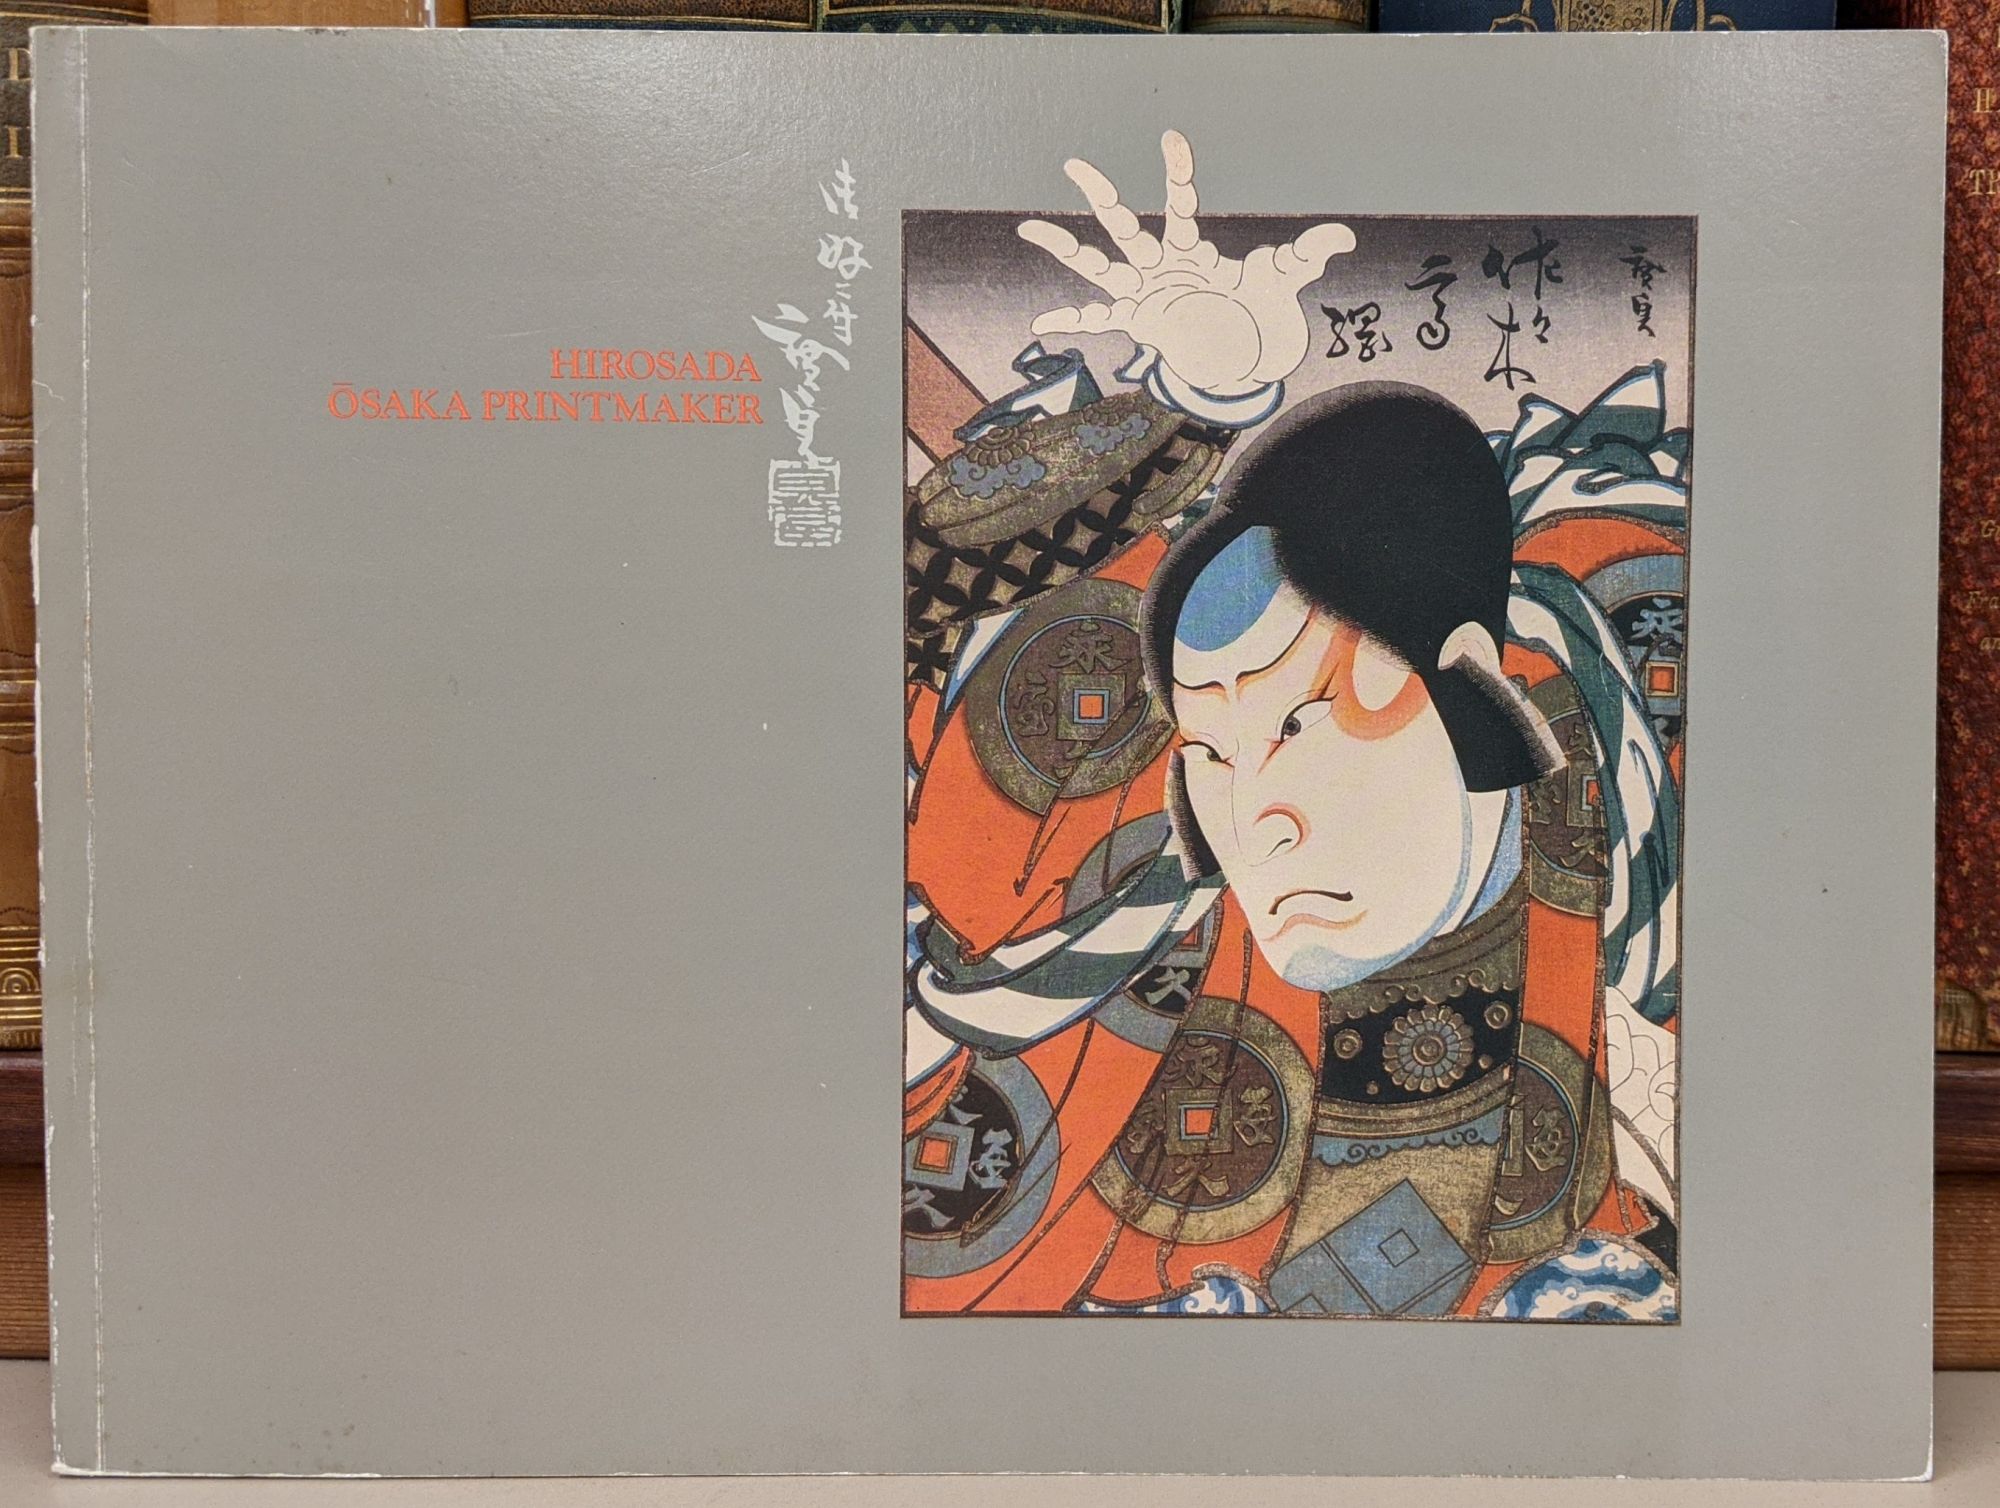 Hirosada, Osaka Printmaker - Jane K. Bledsoe (ed)